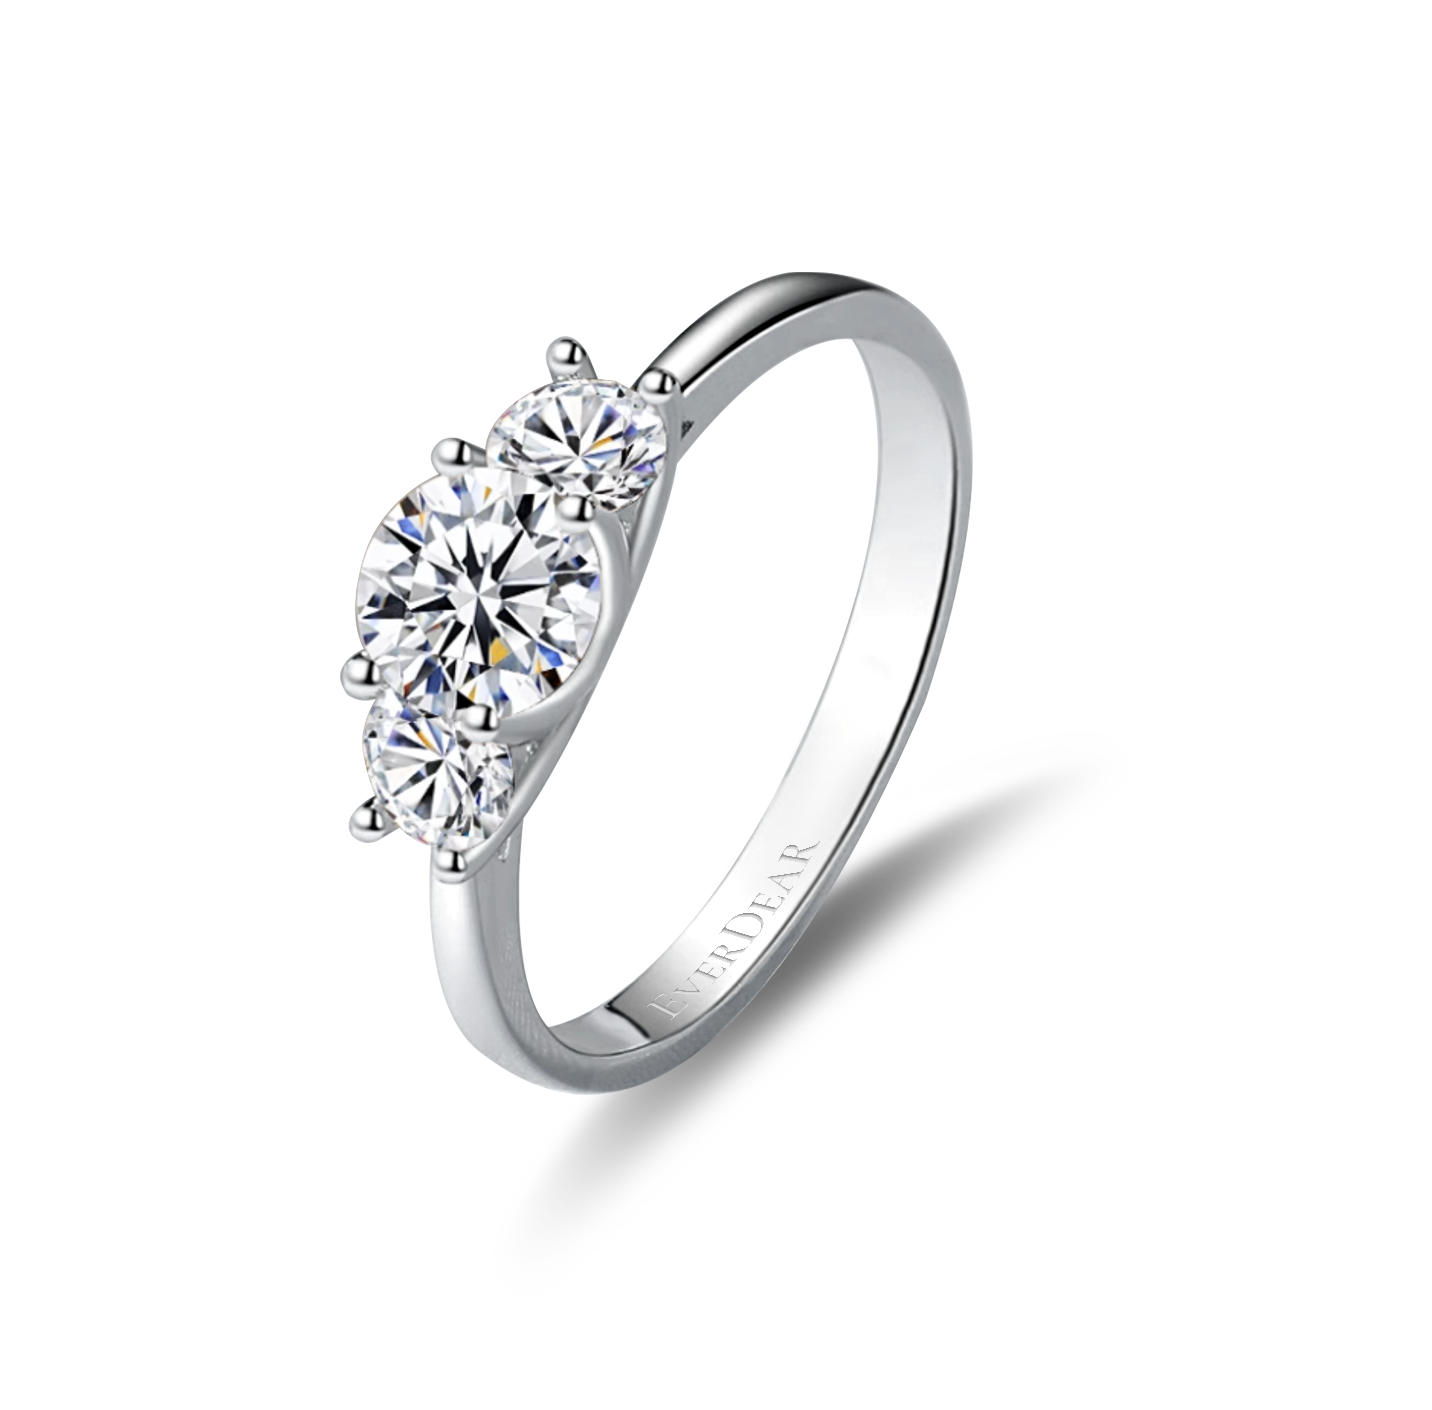 JIU ZUAN Mosanite Diamond Rings HK Size for Women 5 Carat Engagement Round  Cut Real 925 Sterling Silver Wholesale Jewelry - AliExpress